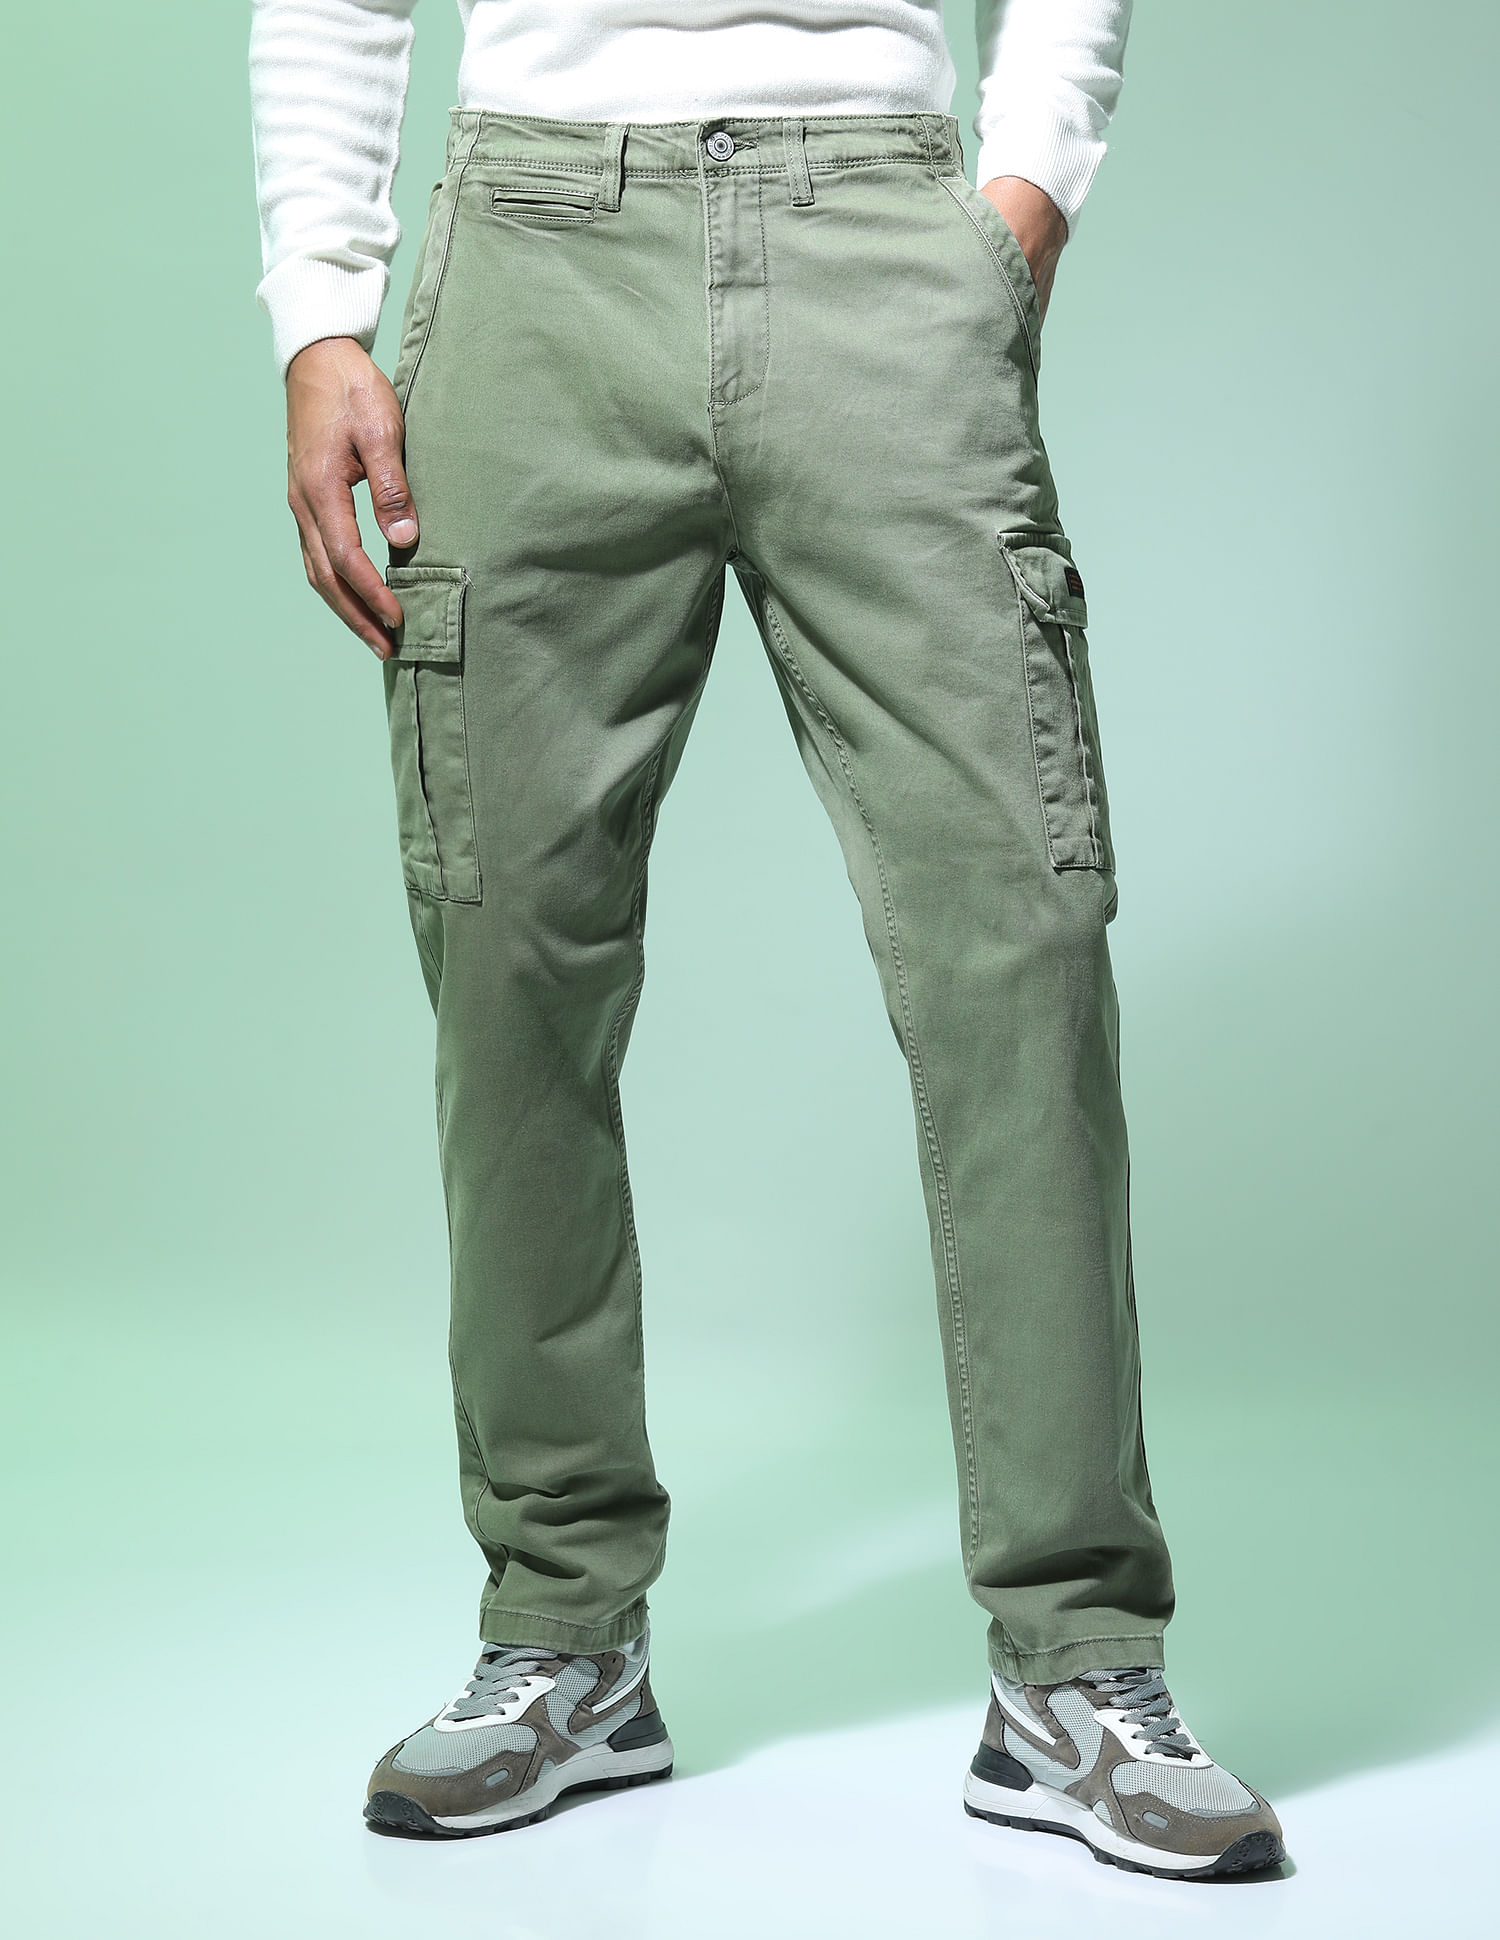 Winter Savings Clearance!YANHAIGONG Clearance Men's Casual Pure Color  Outdoors Zipper Pocket Casual Athletic Pants Sweatpants Outside Work Pants  for Man Fashion Deals - Walmart.com